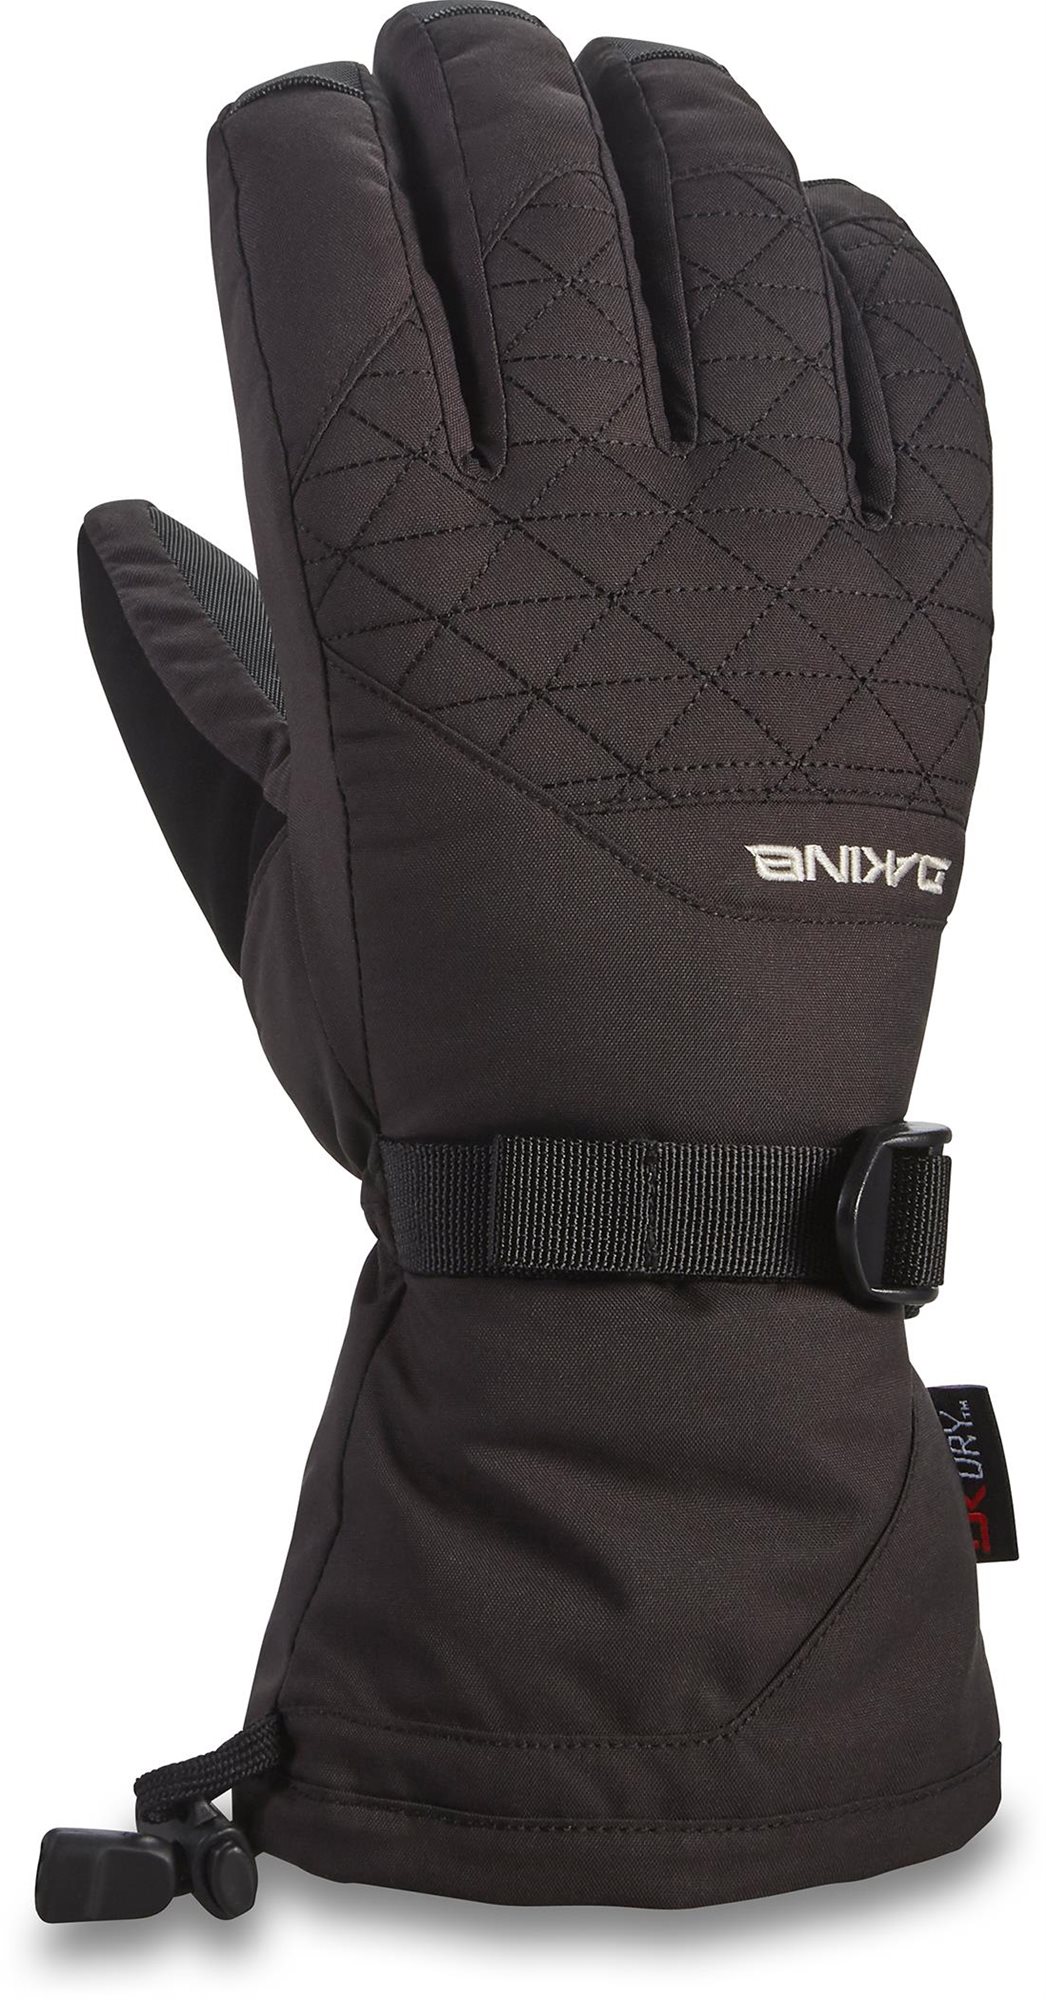 Síkesztyű Dakine Camino Glove